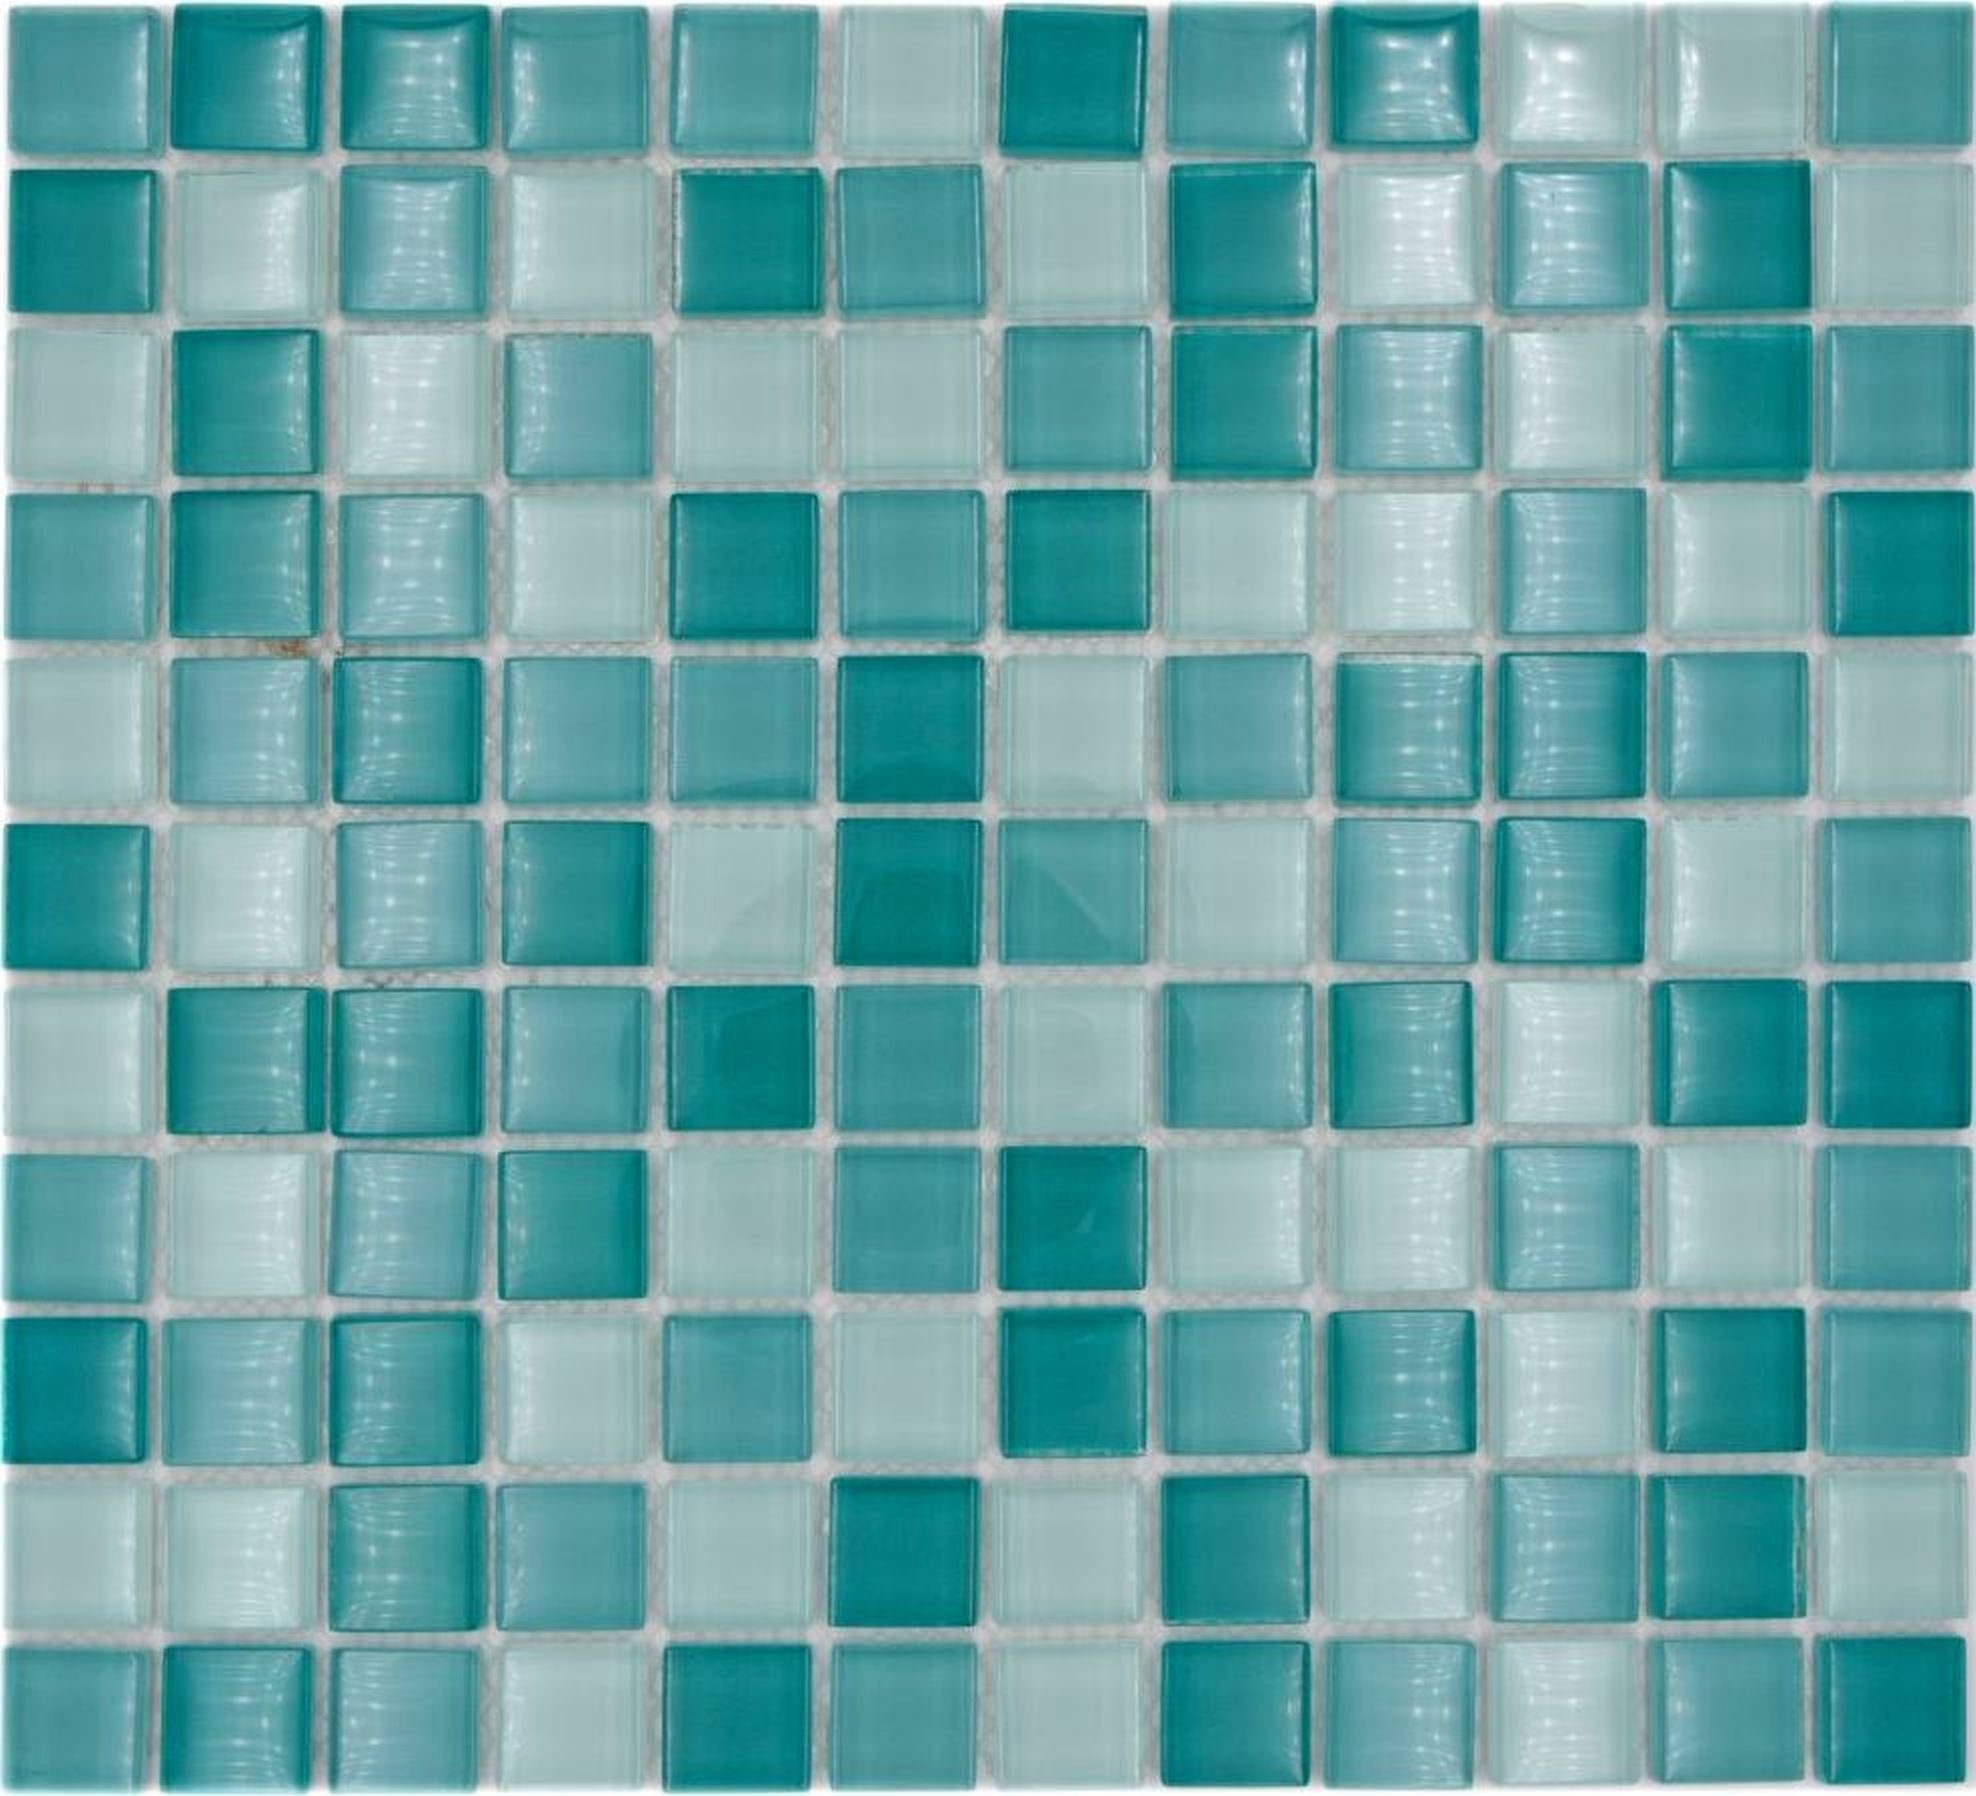 Mosani Mosaikfliesen Mosaikfliesen grün türkis Küche WAND BAD Glasmosaik WC